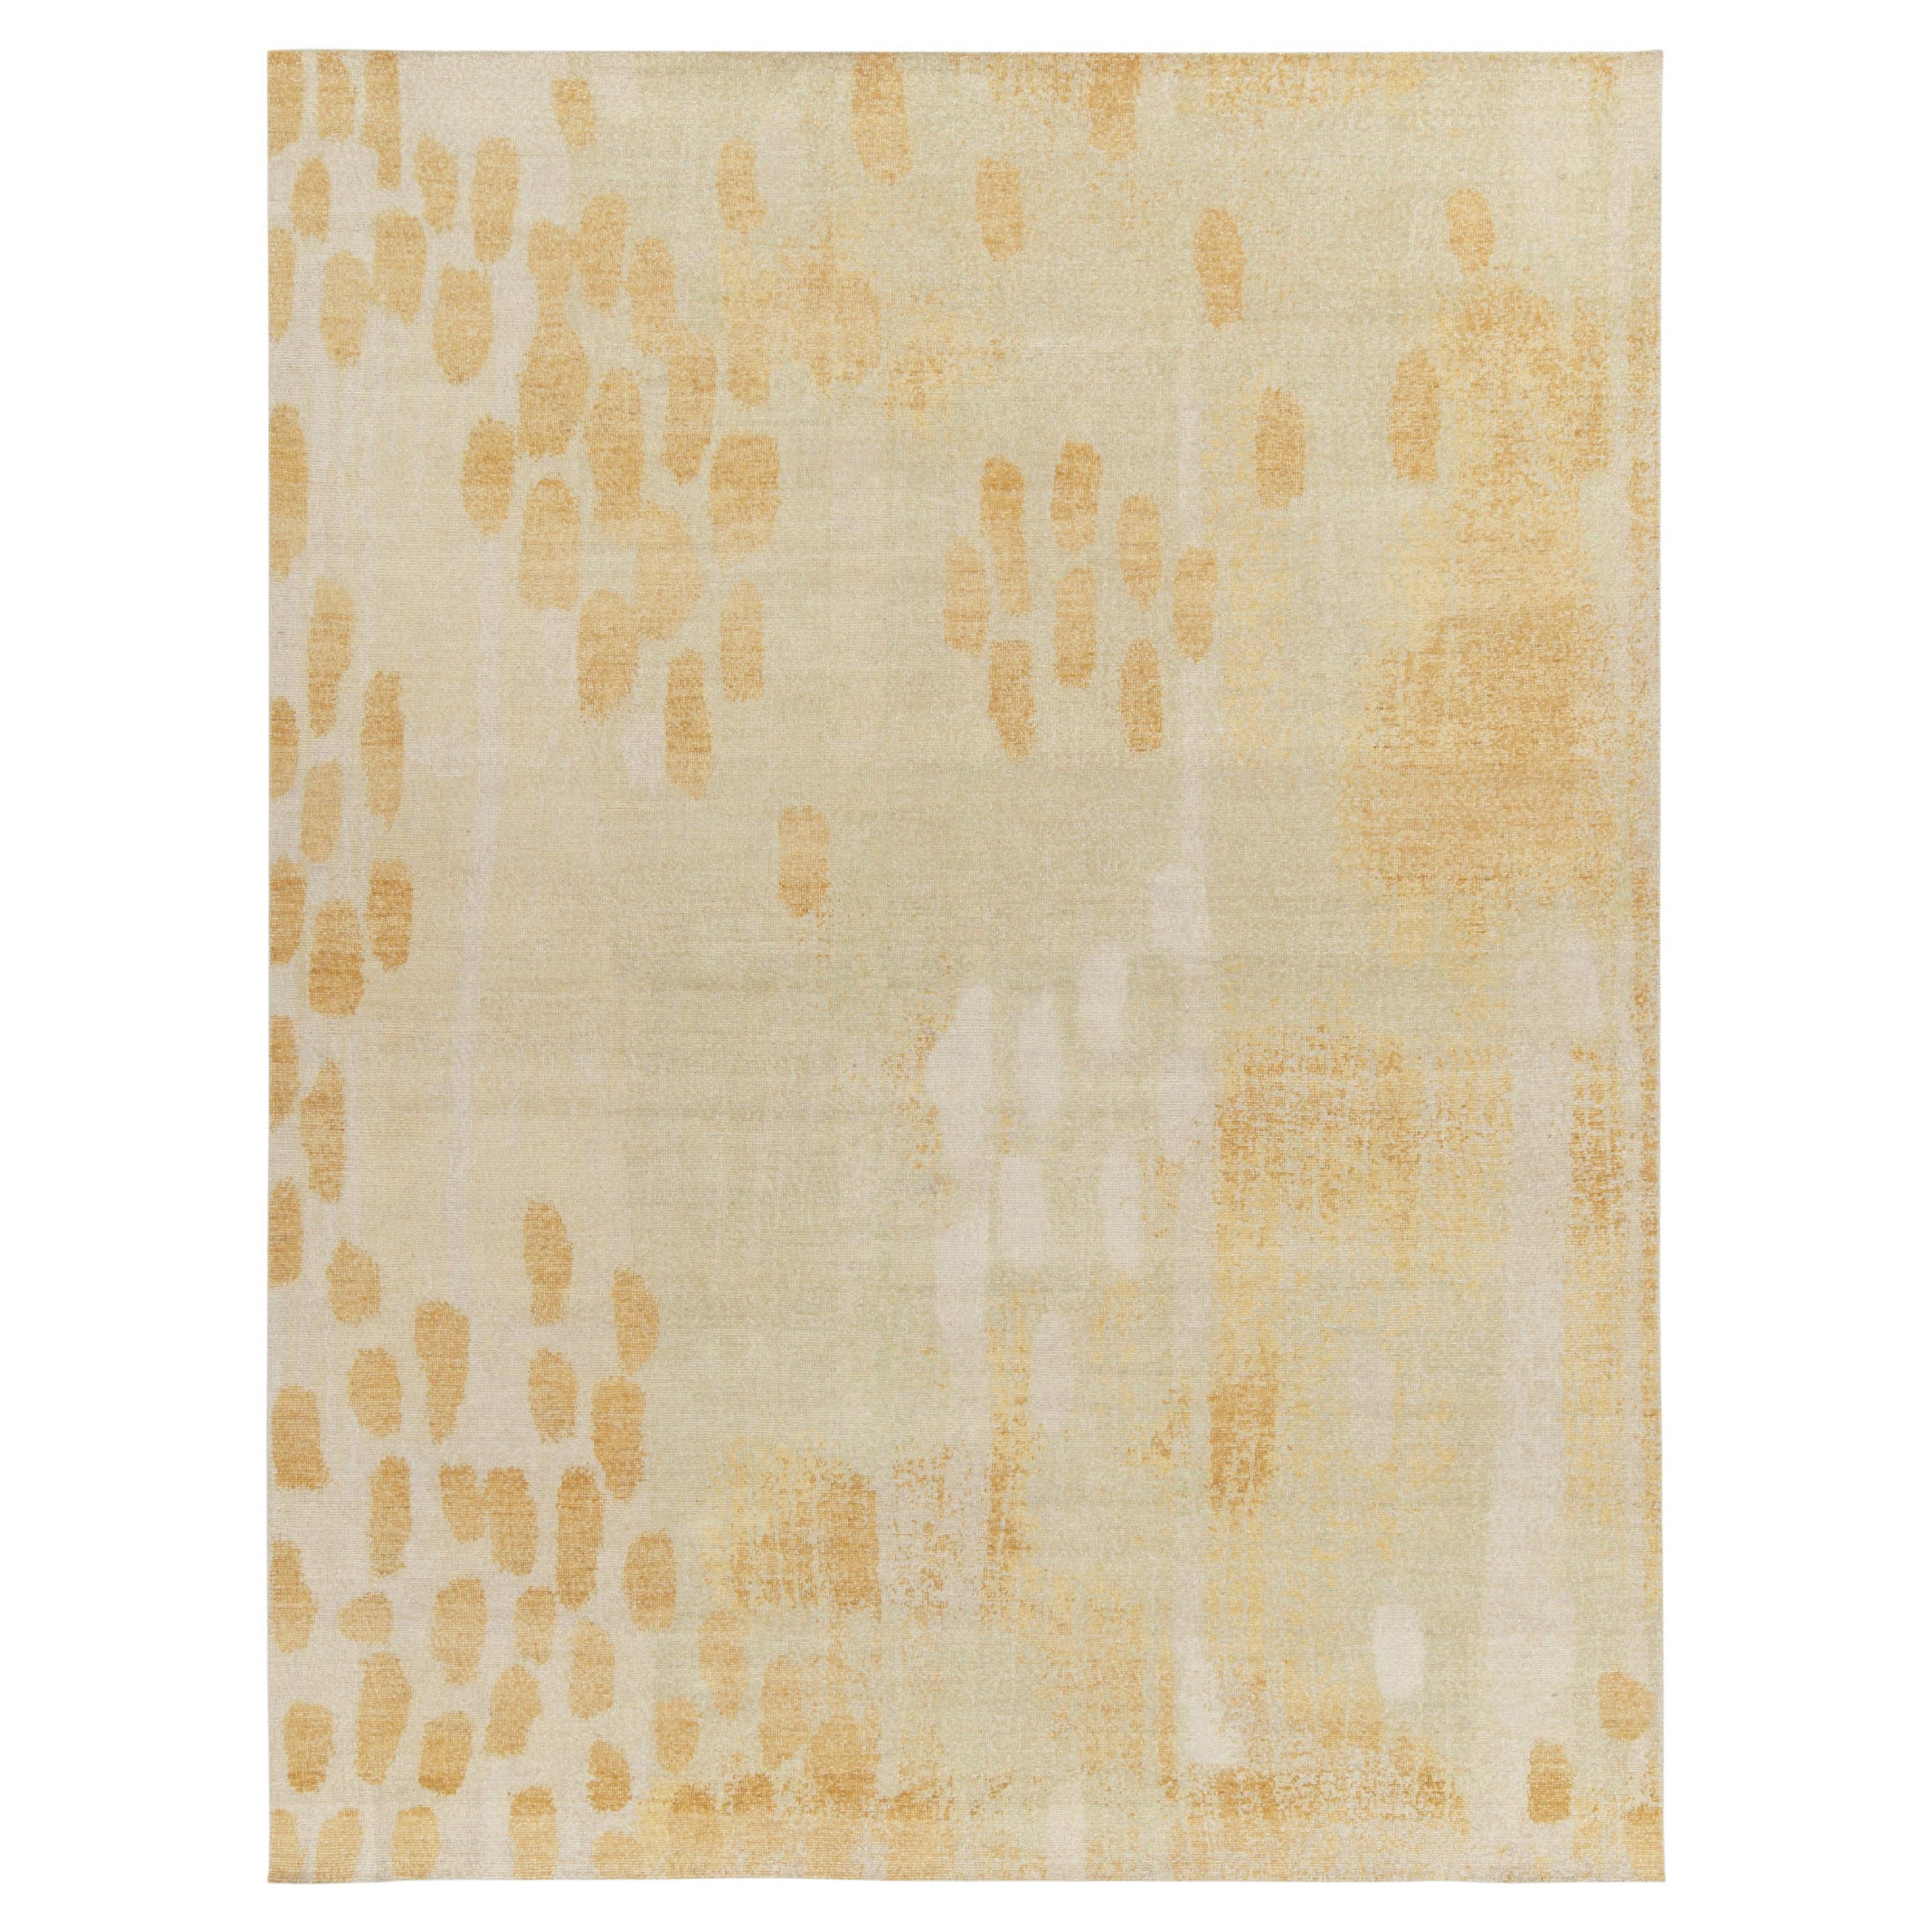 Rug & Kilim's Modern Rug im Distressed-Stil in Creme, Gold, Weiß Dots Muster